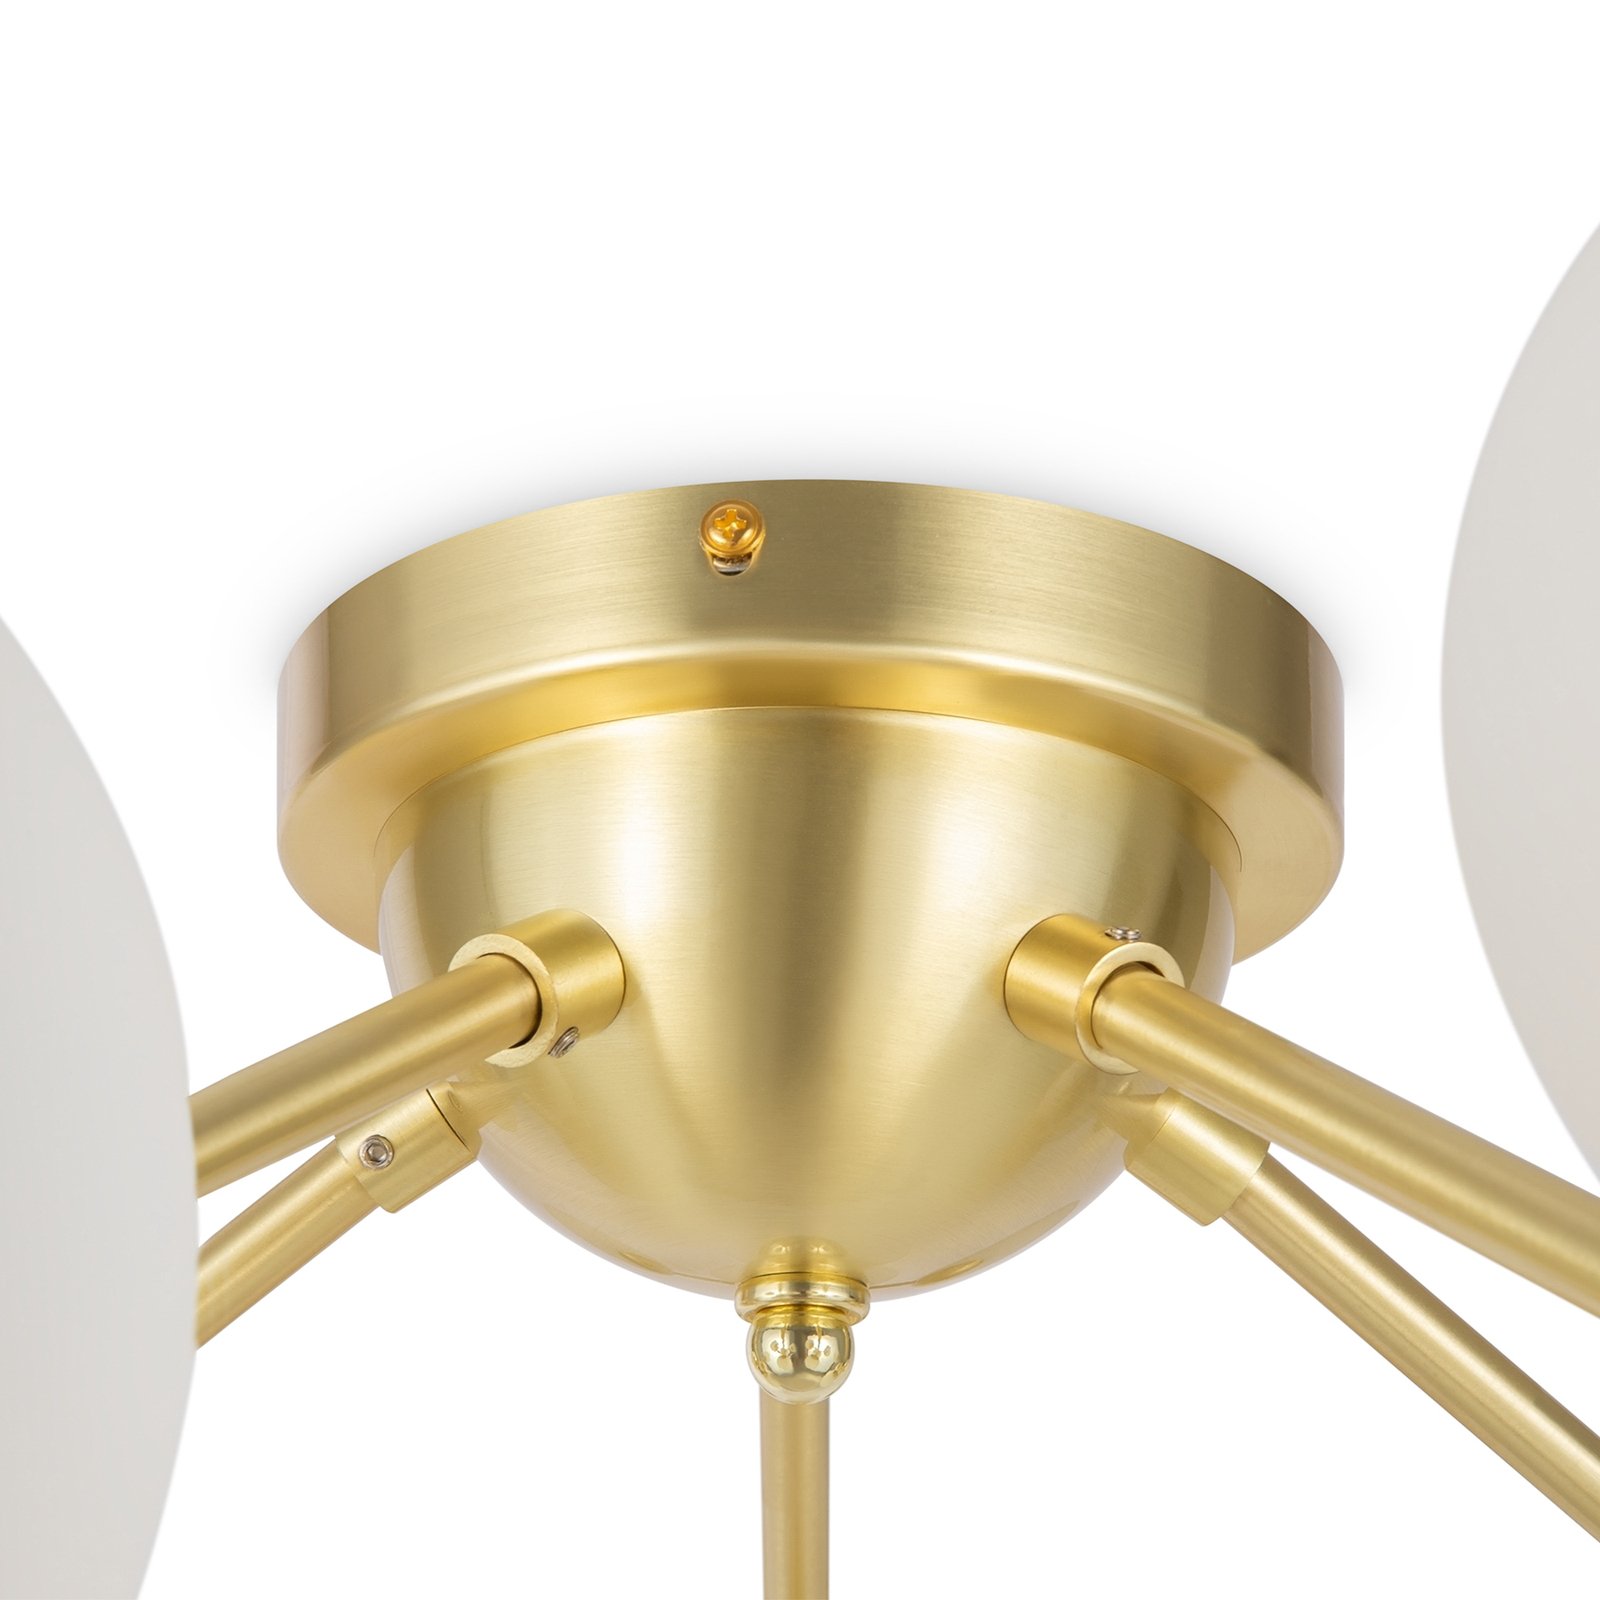 Лампа за таван Maytoni Dallas с 20 лампи, височина 25 cm, златна